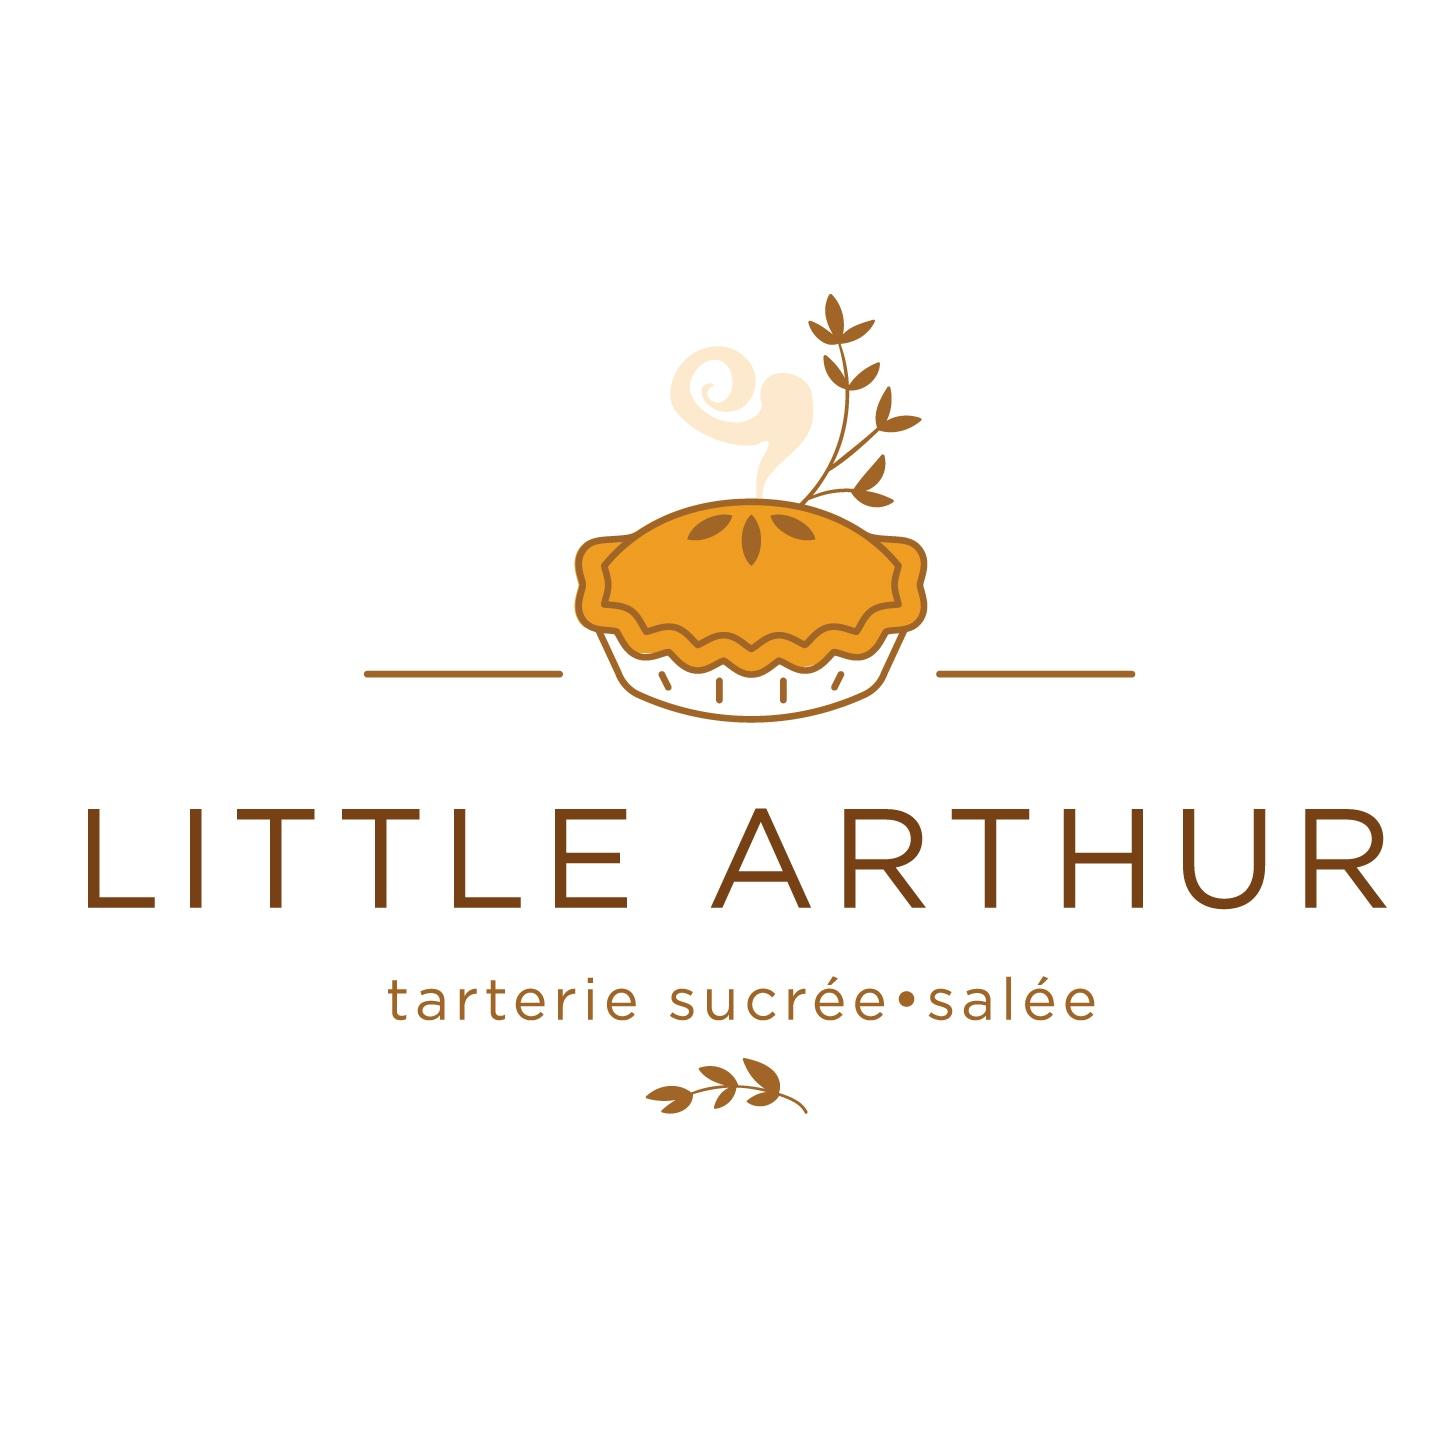 Little Arthur